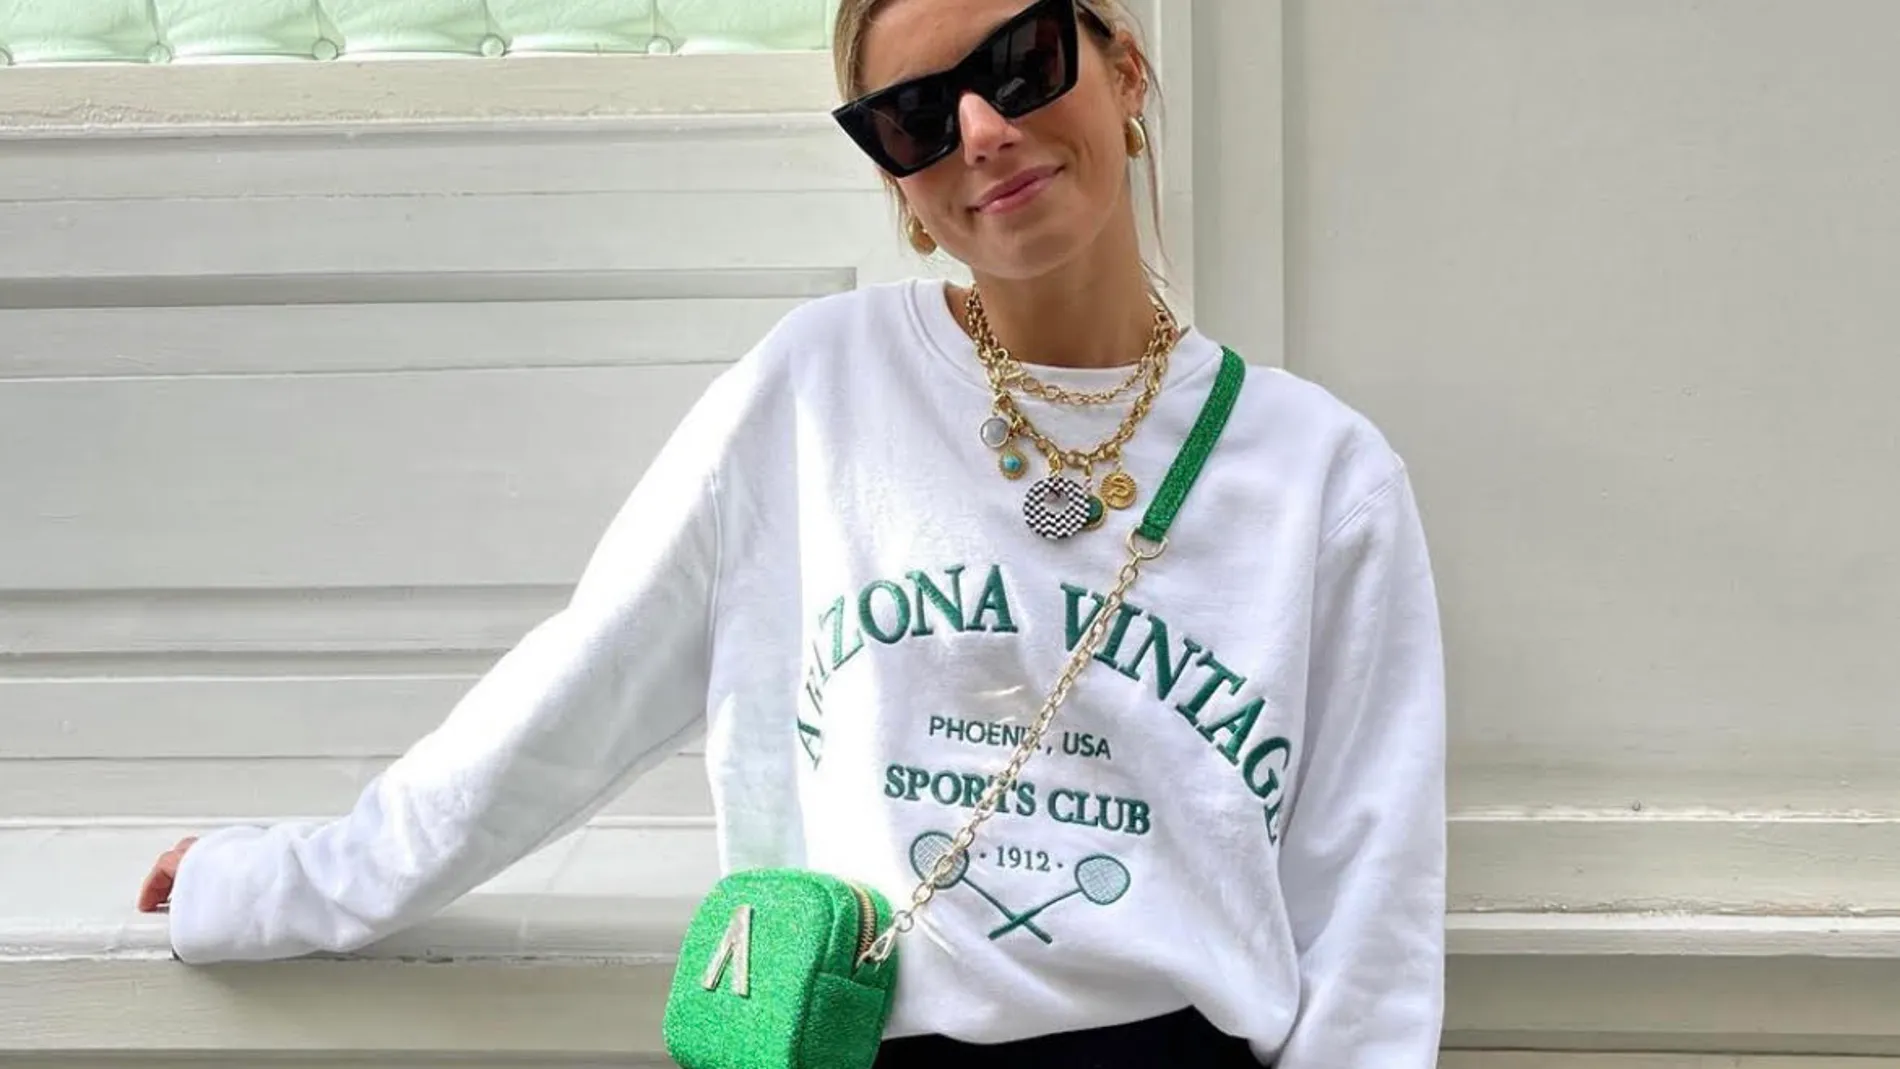 Sara Baceiredo con bolso verde de su marca.